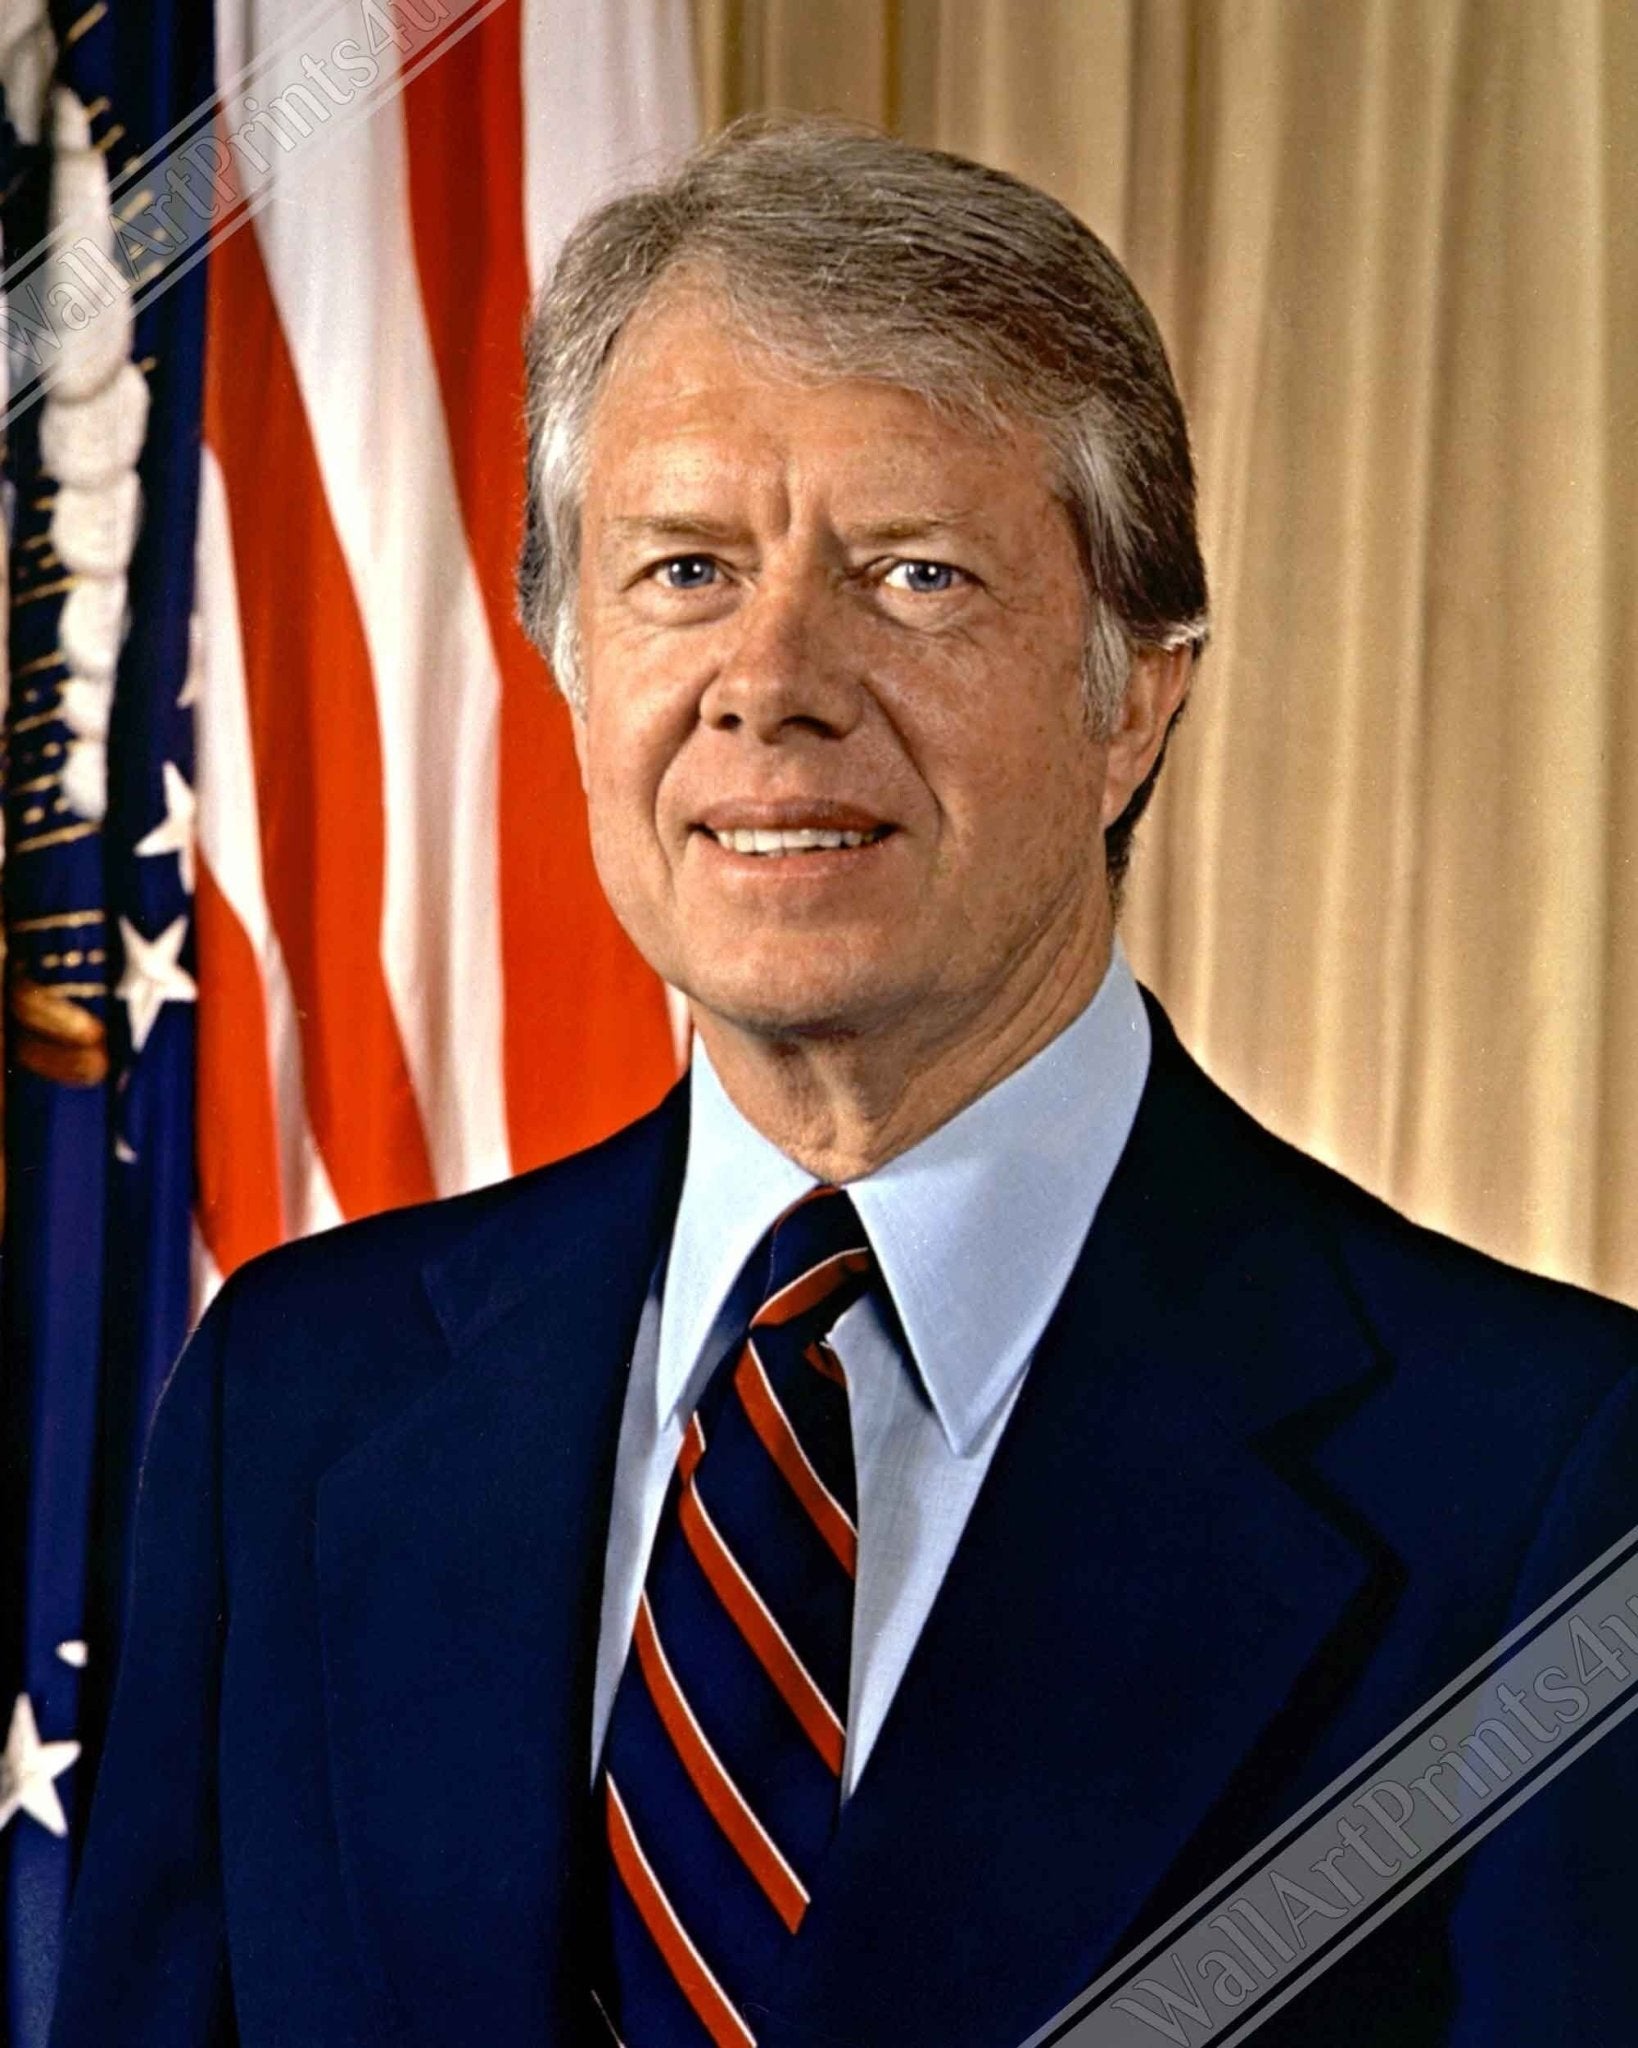 Jimmy Carter Framed, 39th President Of These United States, Vintage Photo Portrait - Jimmy Carter Framed Print UK, EU USA Domestic Shipping - WallArtPrints4U